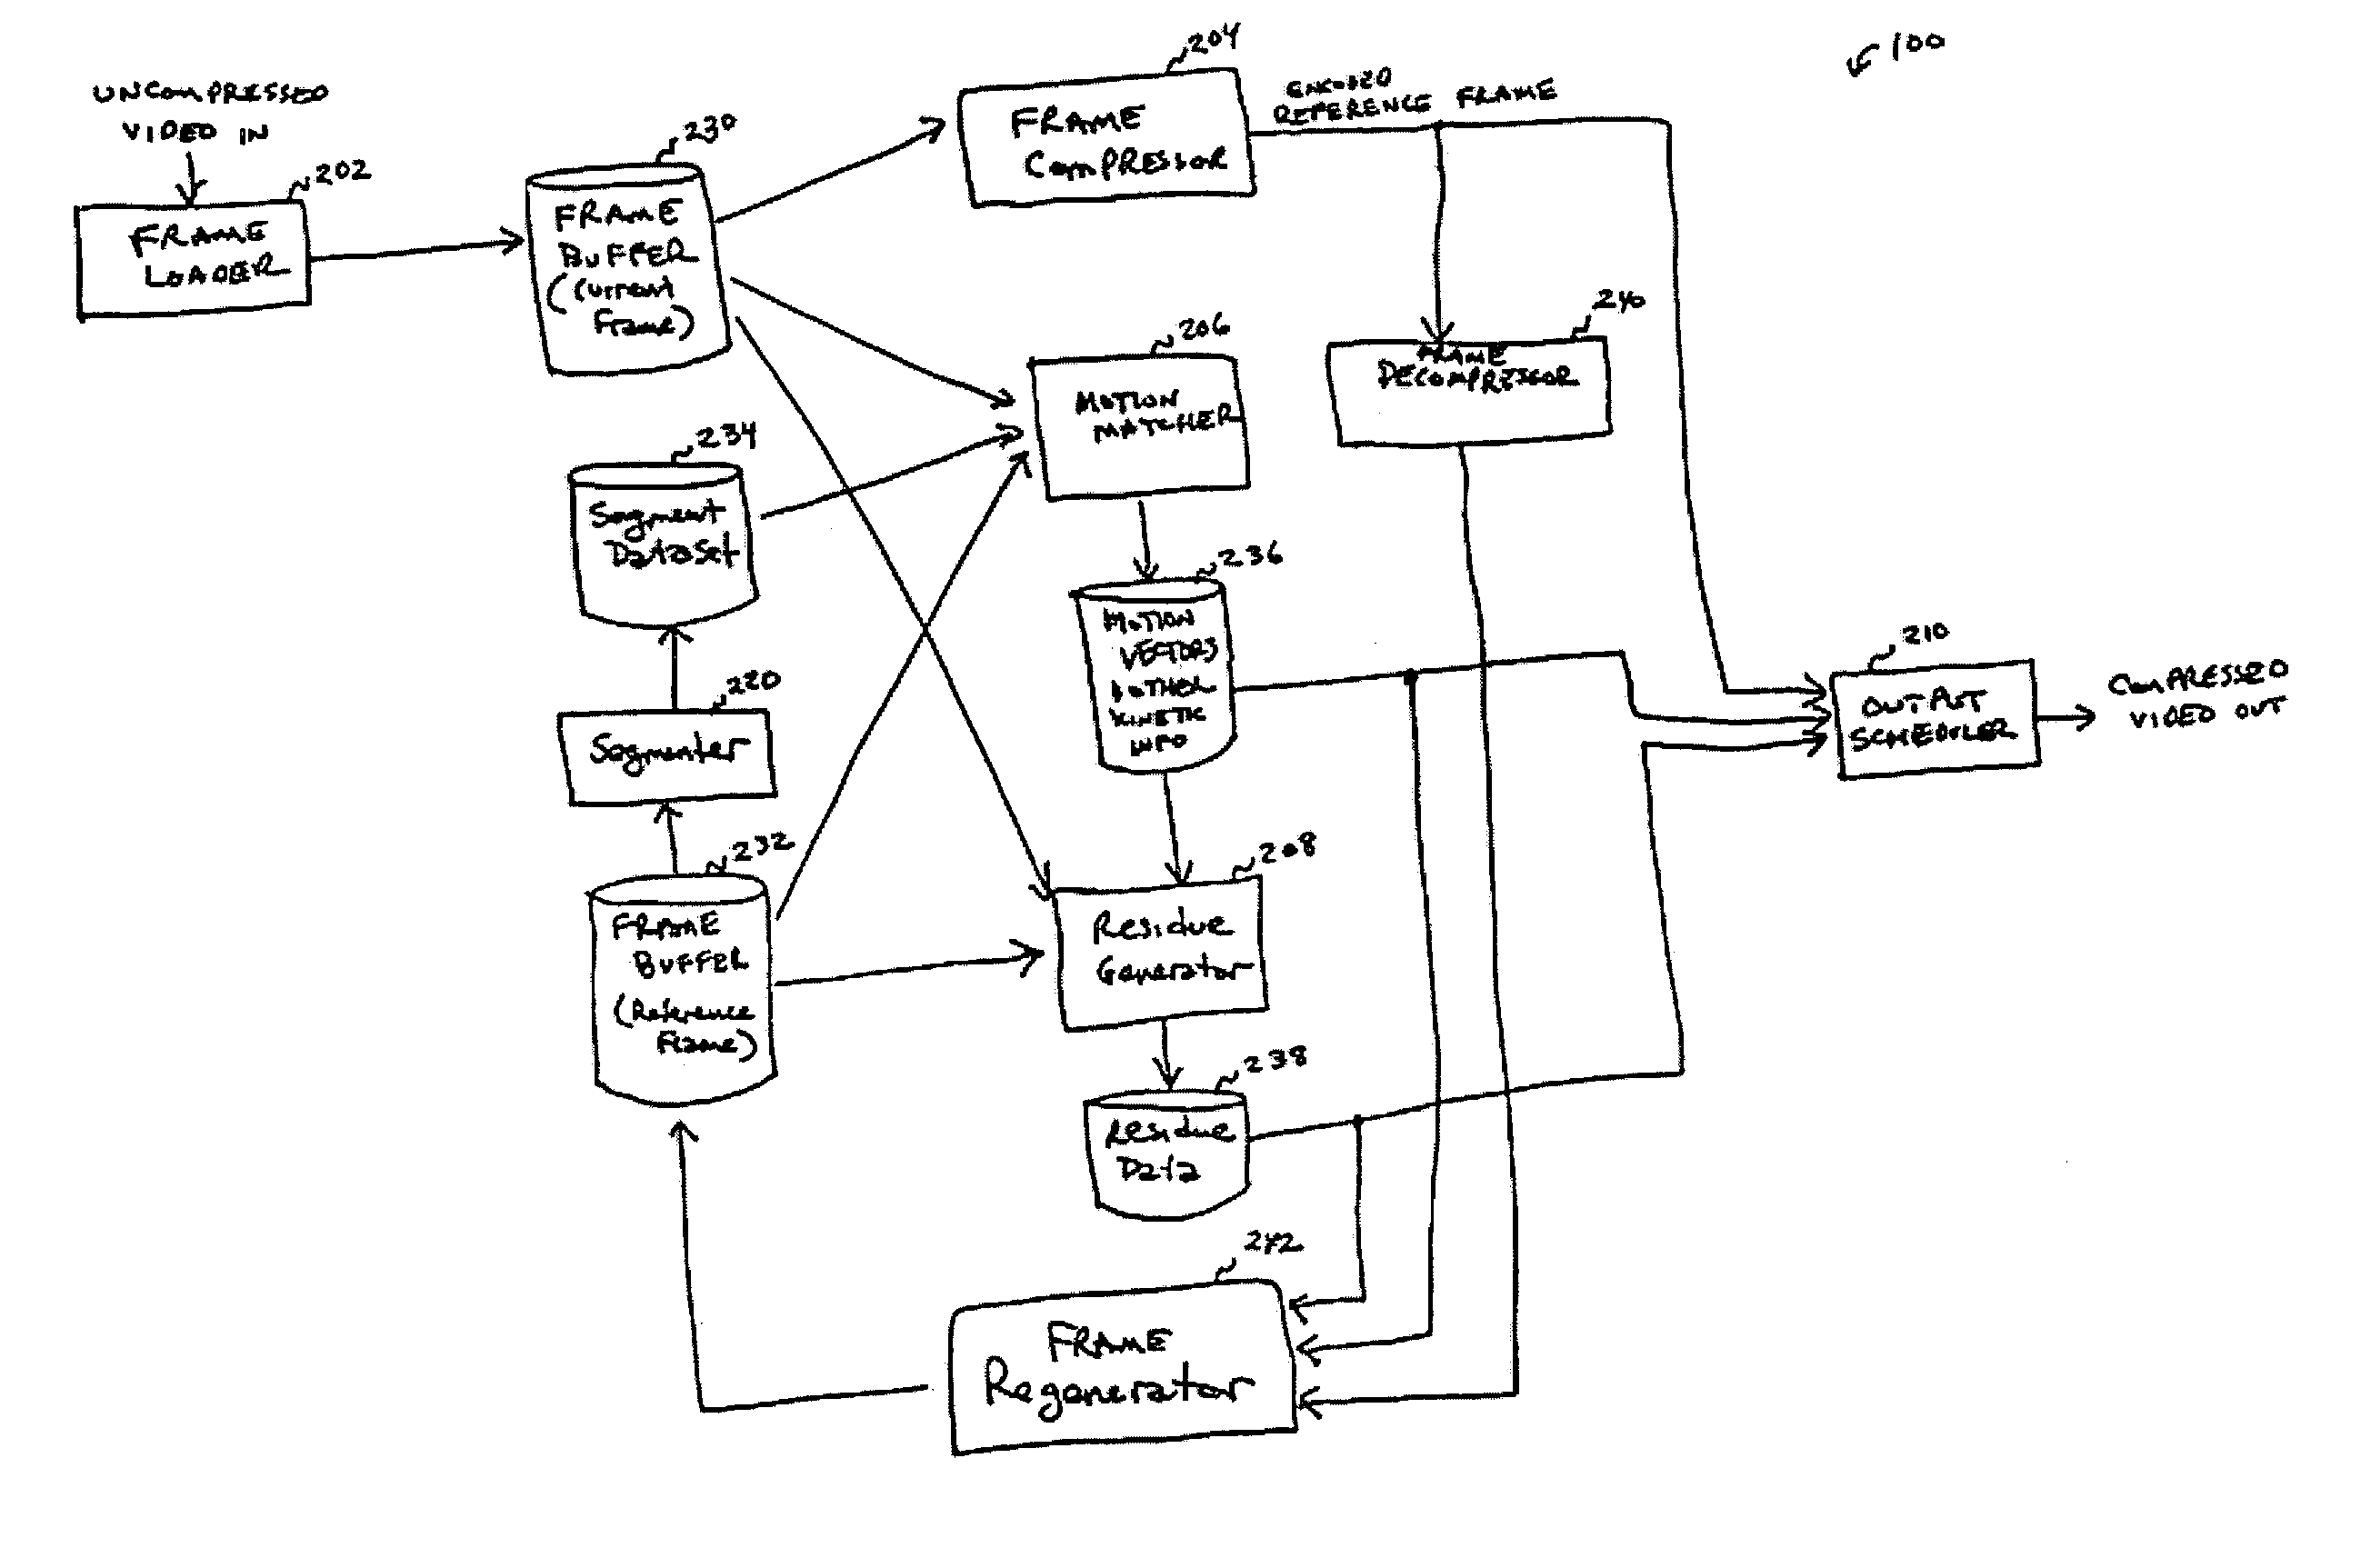 Segment-based encoding system using segment hierarchies